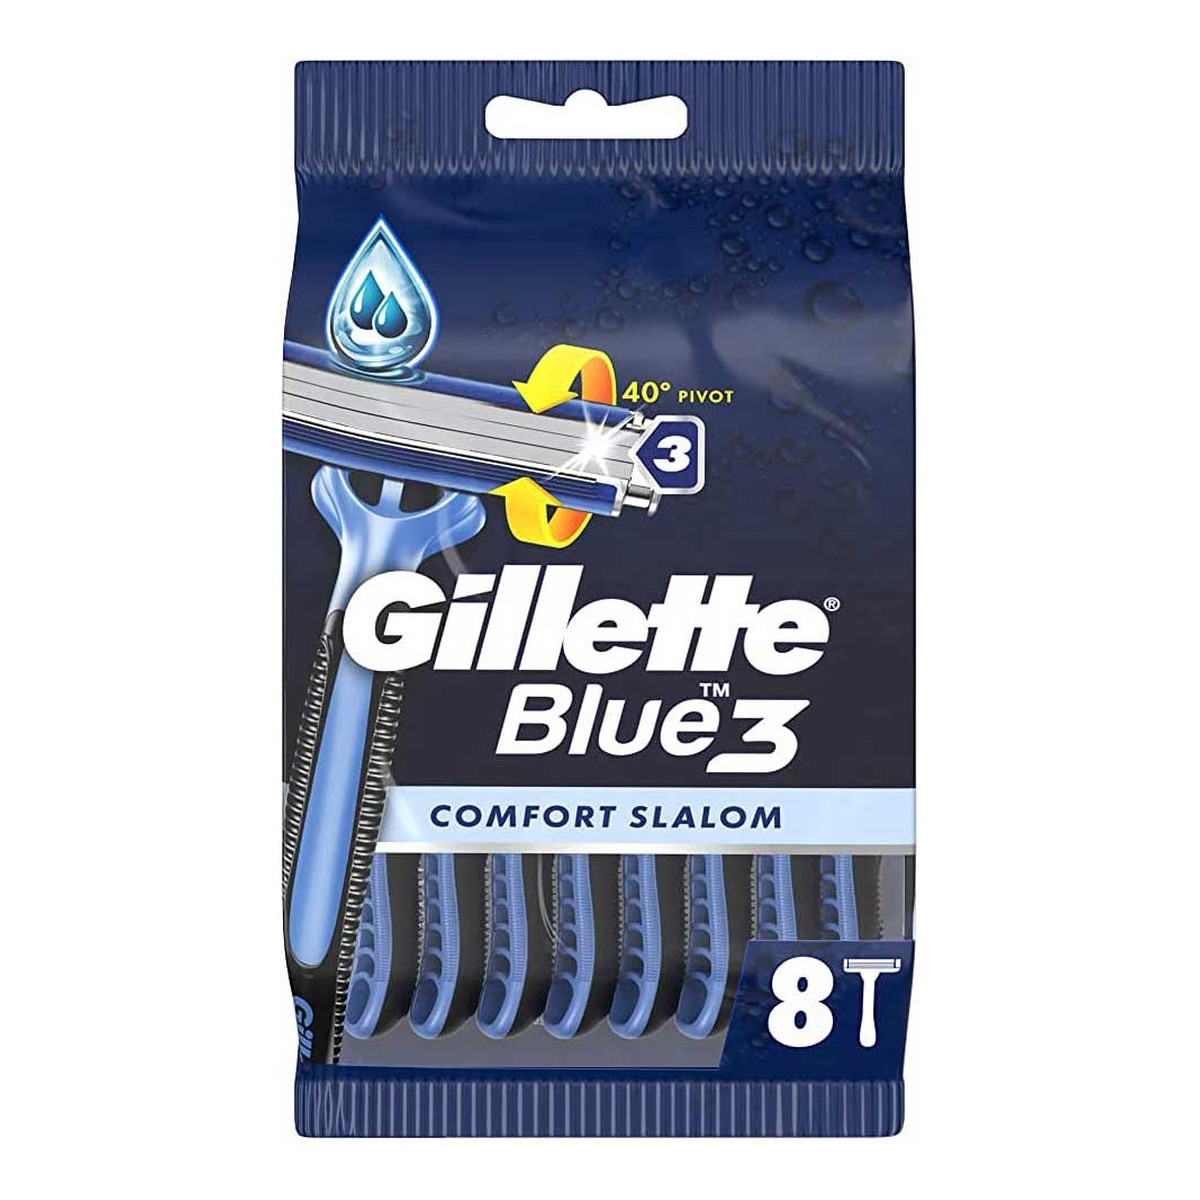 Gillette Blue 3 comfort slalom maszynki do golenia 8szt